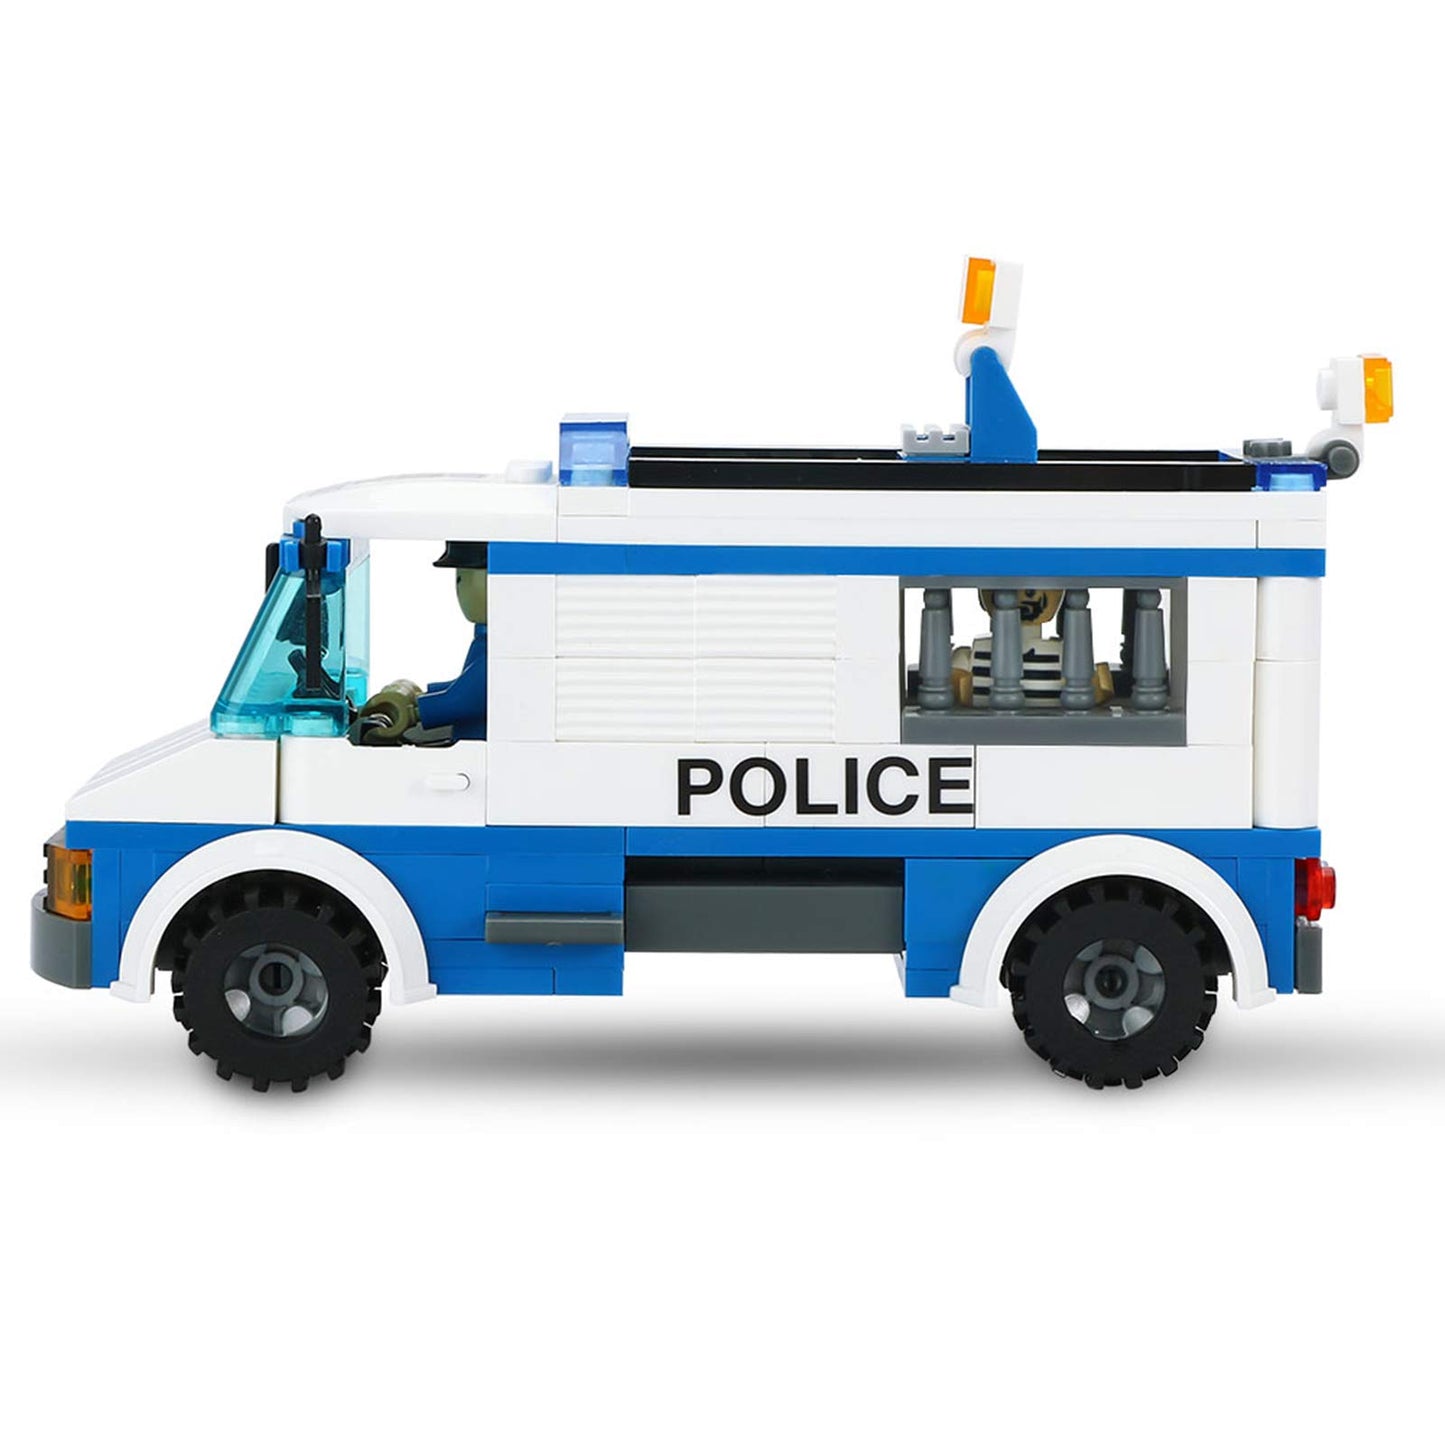 COGO MAN City Police Car Building Sets 194 Pieces Police Patrol Car Toys Cop Car Prisoner Transporter Building Kit for Boys and Girls Age 6 and up